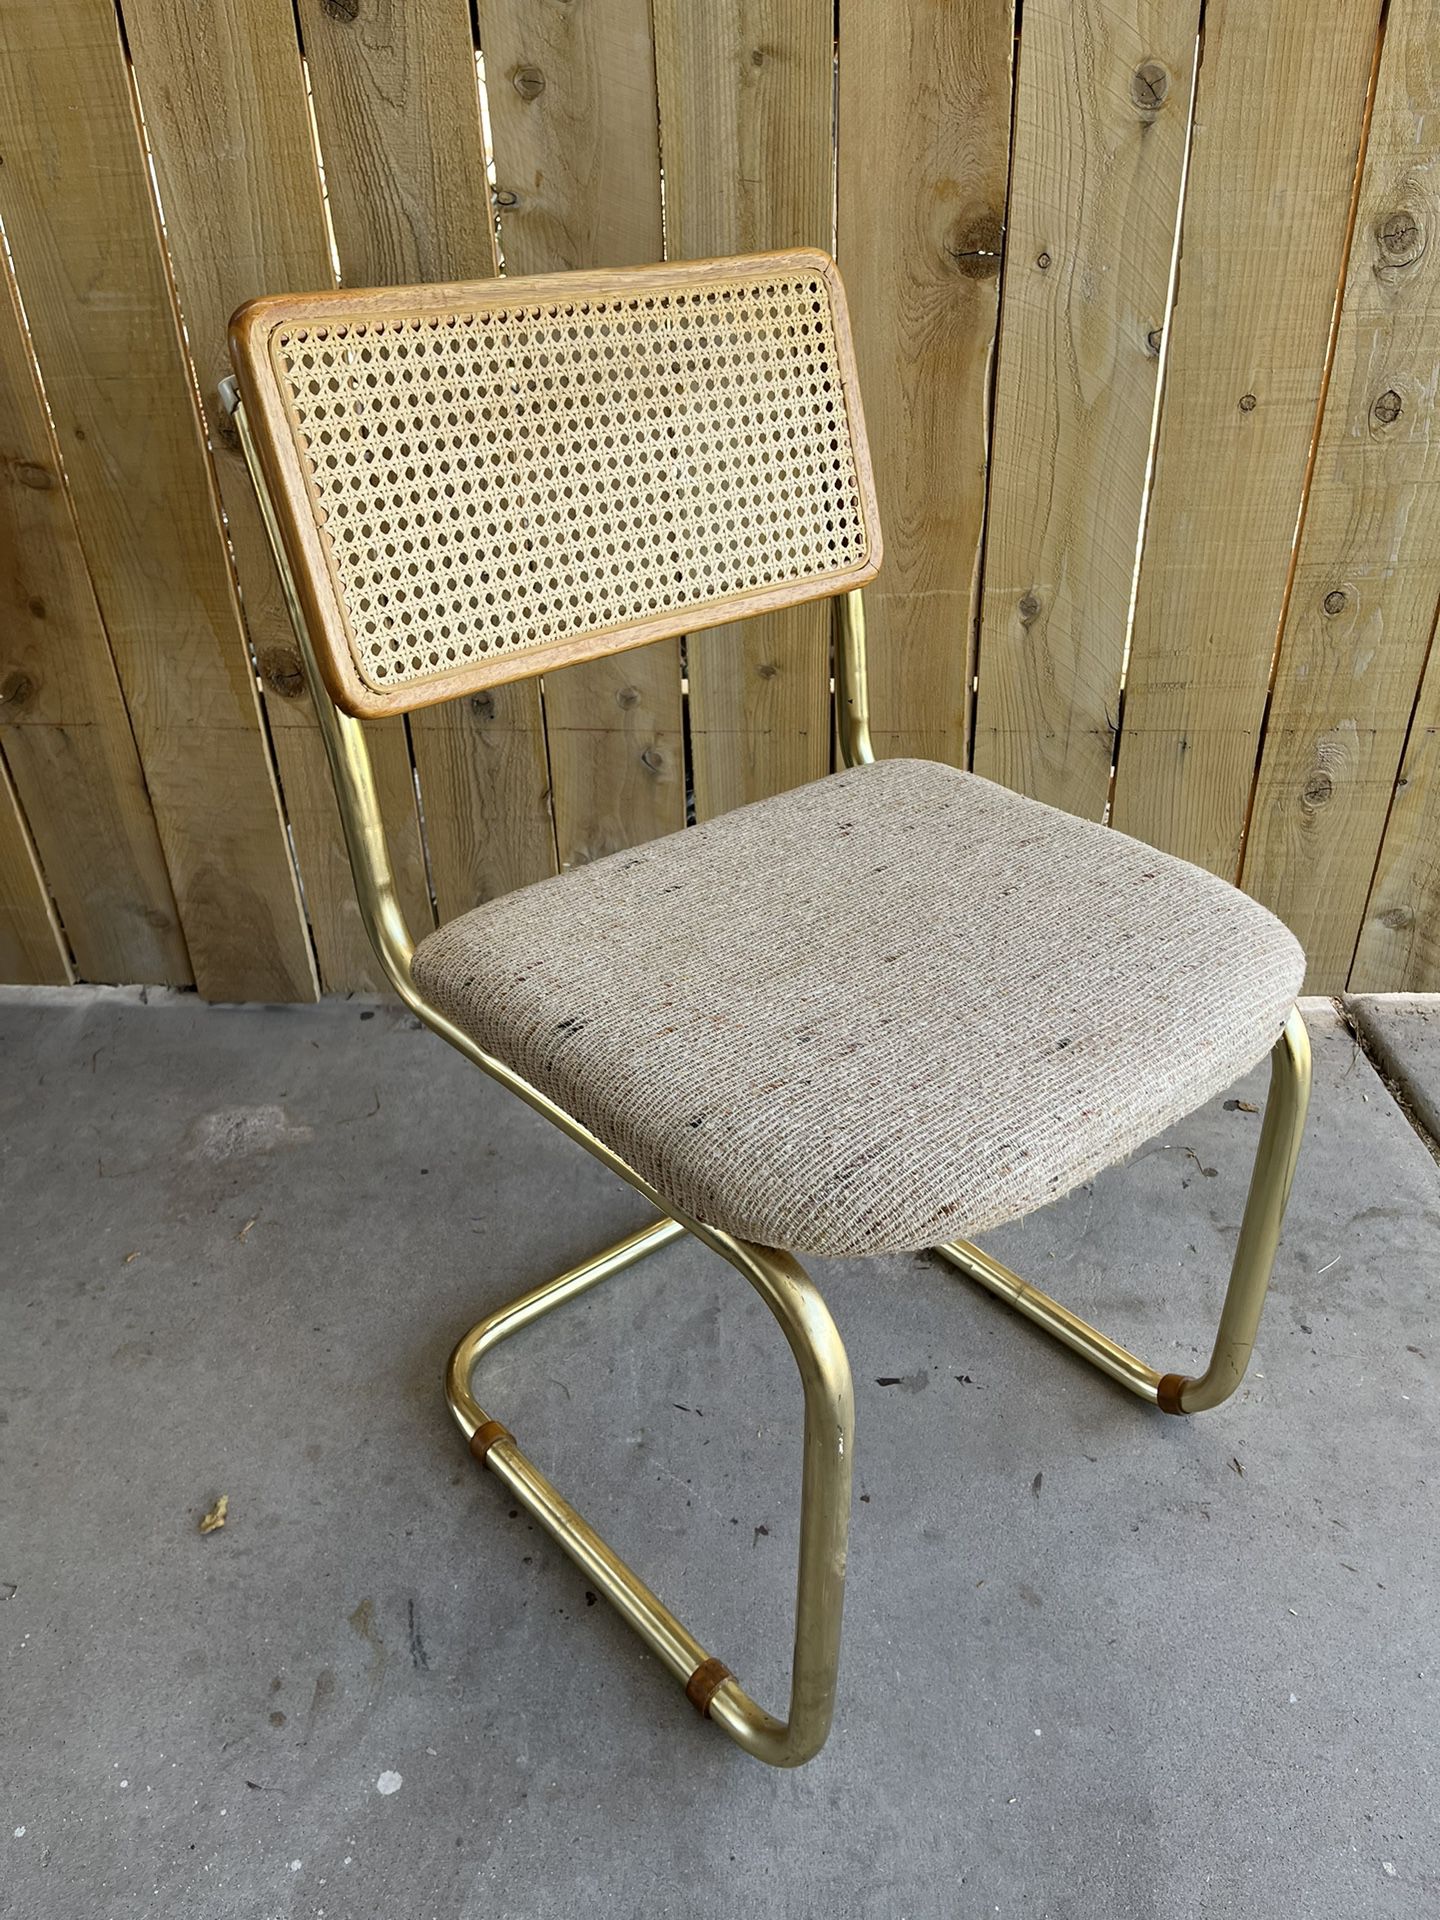 Vintage Cesca Style Cane Back Chair